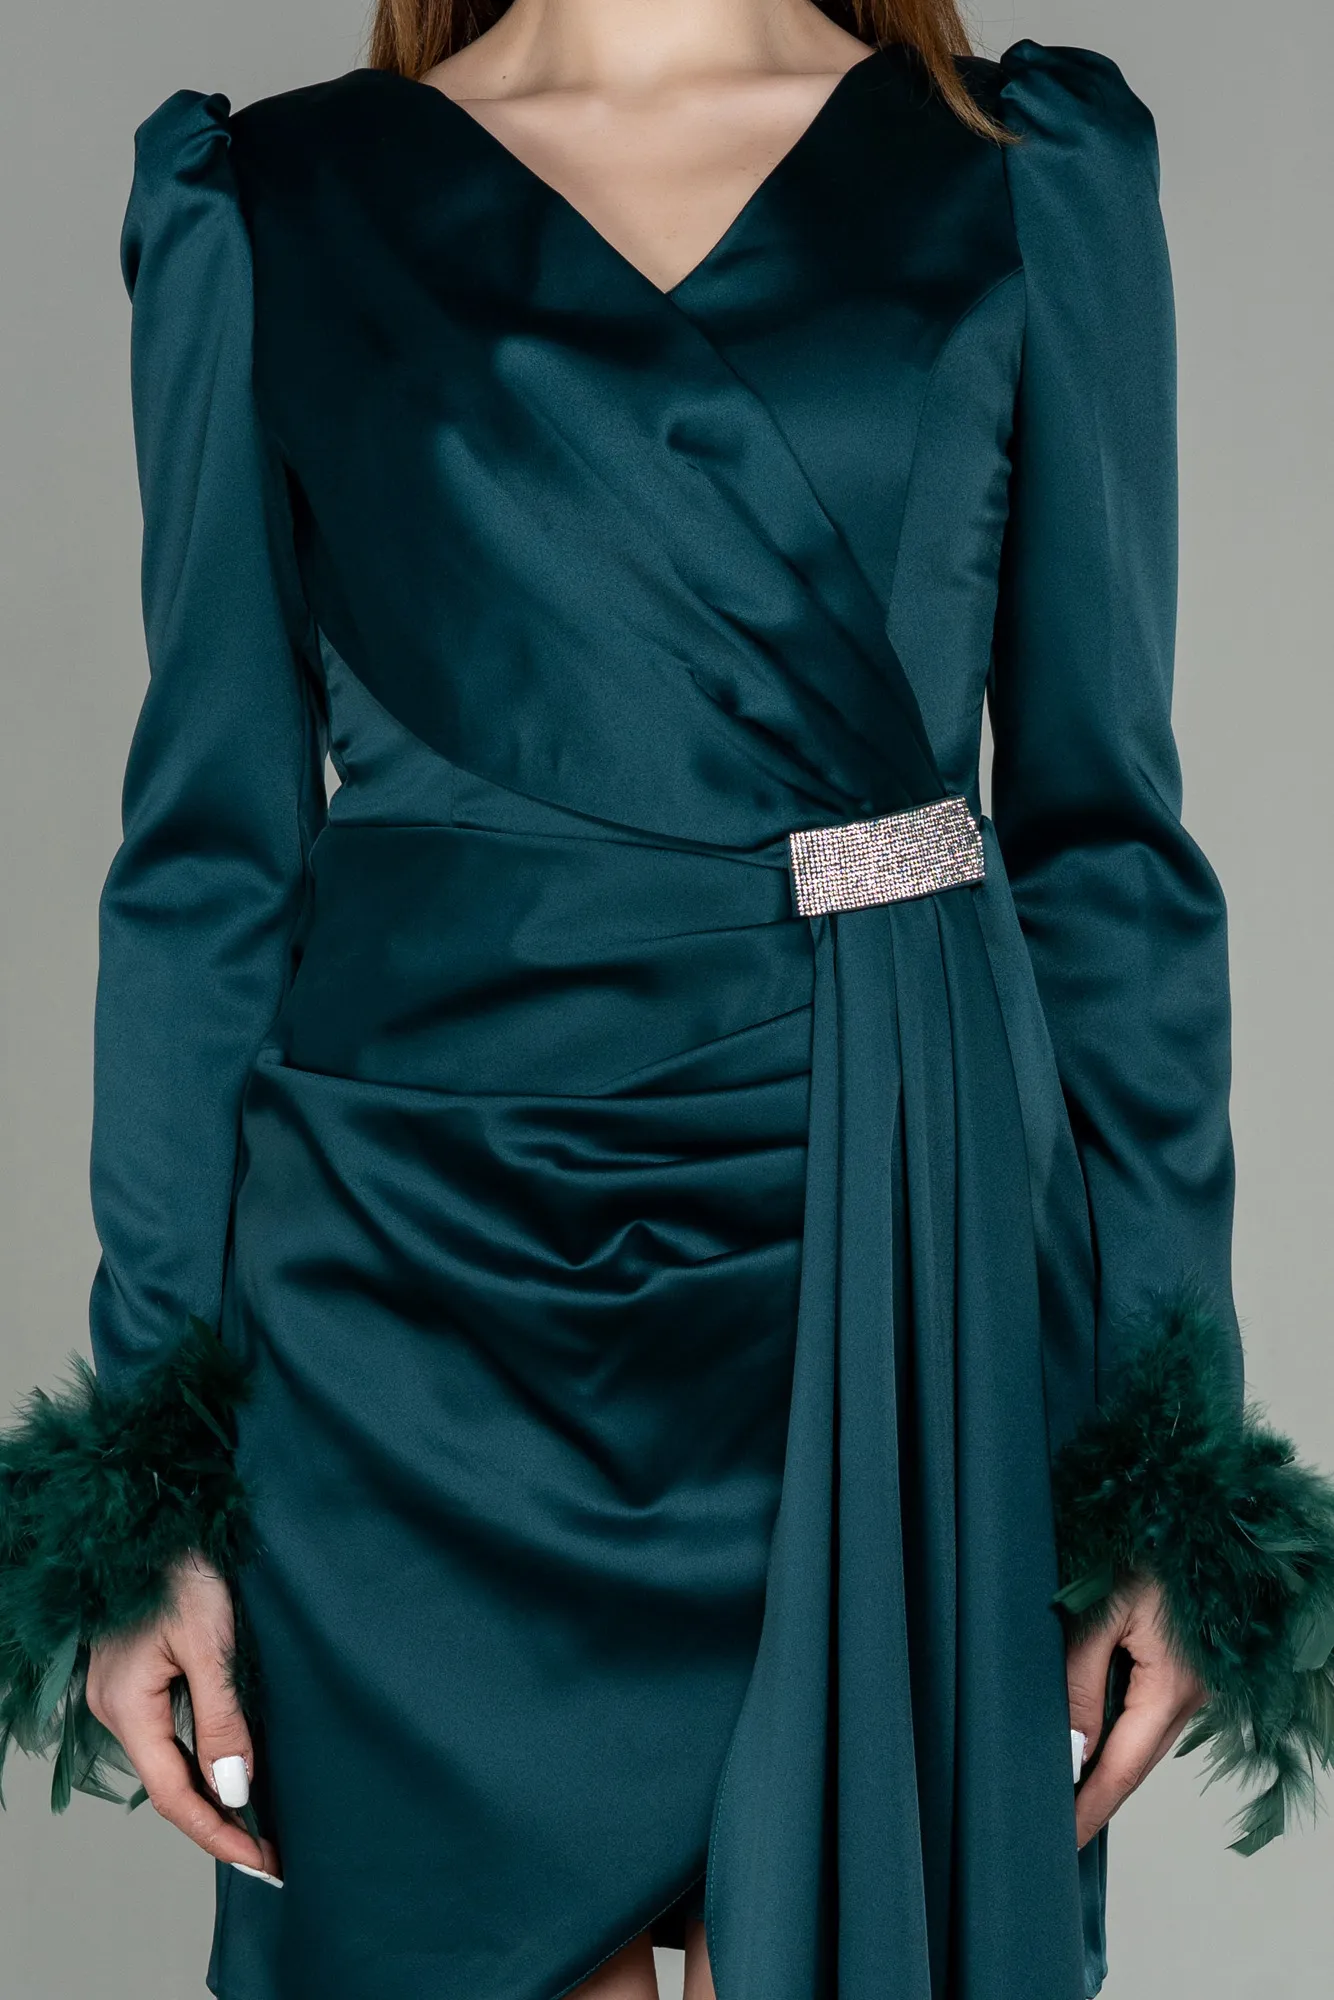 Emerald Green-Short Satin Invitation Dress ABU2902